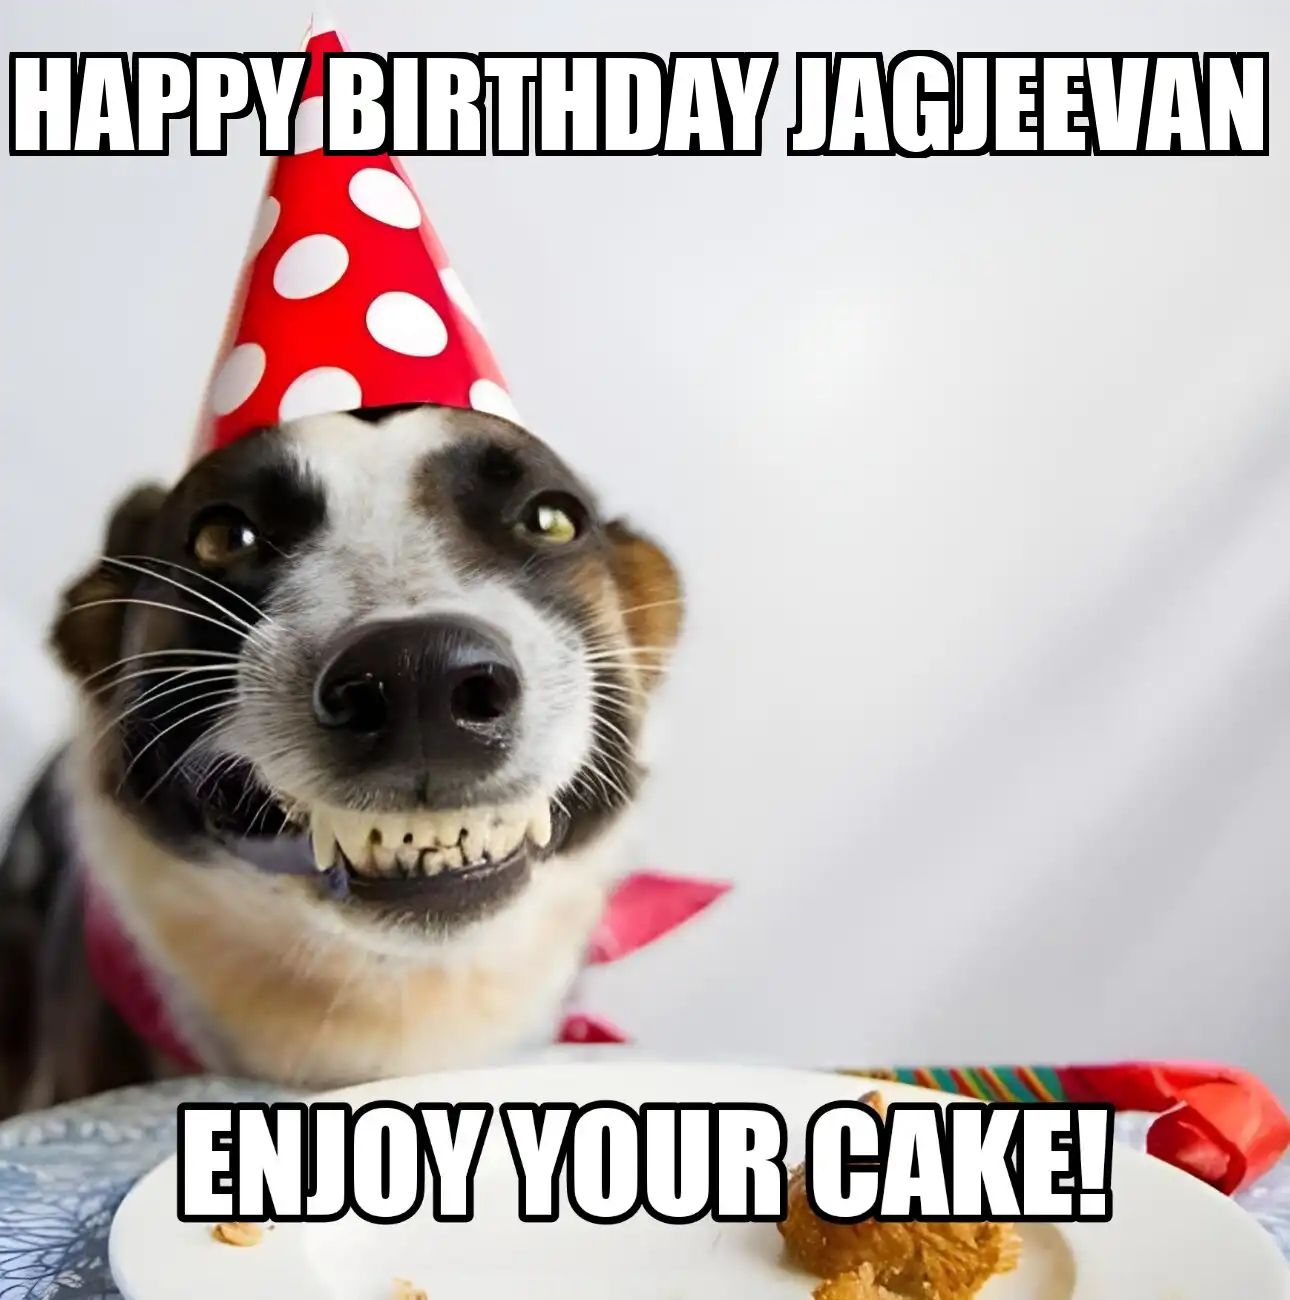 Happy Birthday Jagjeevan Enjoy Your Cake Dog Meme